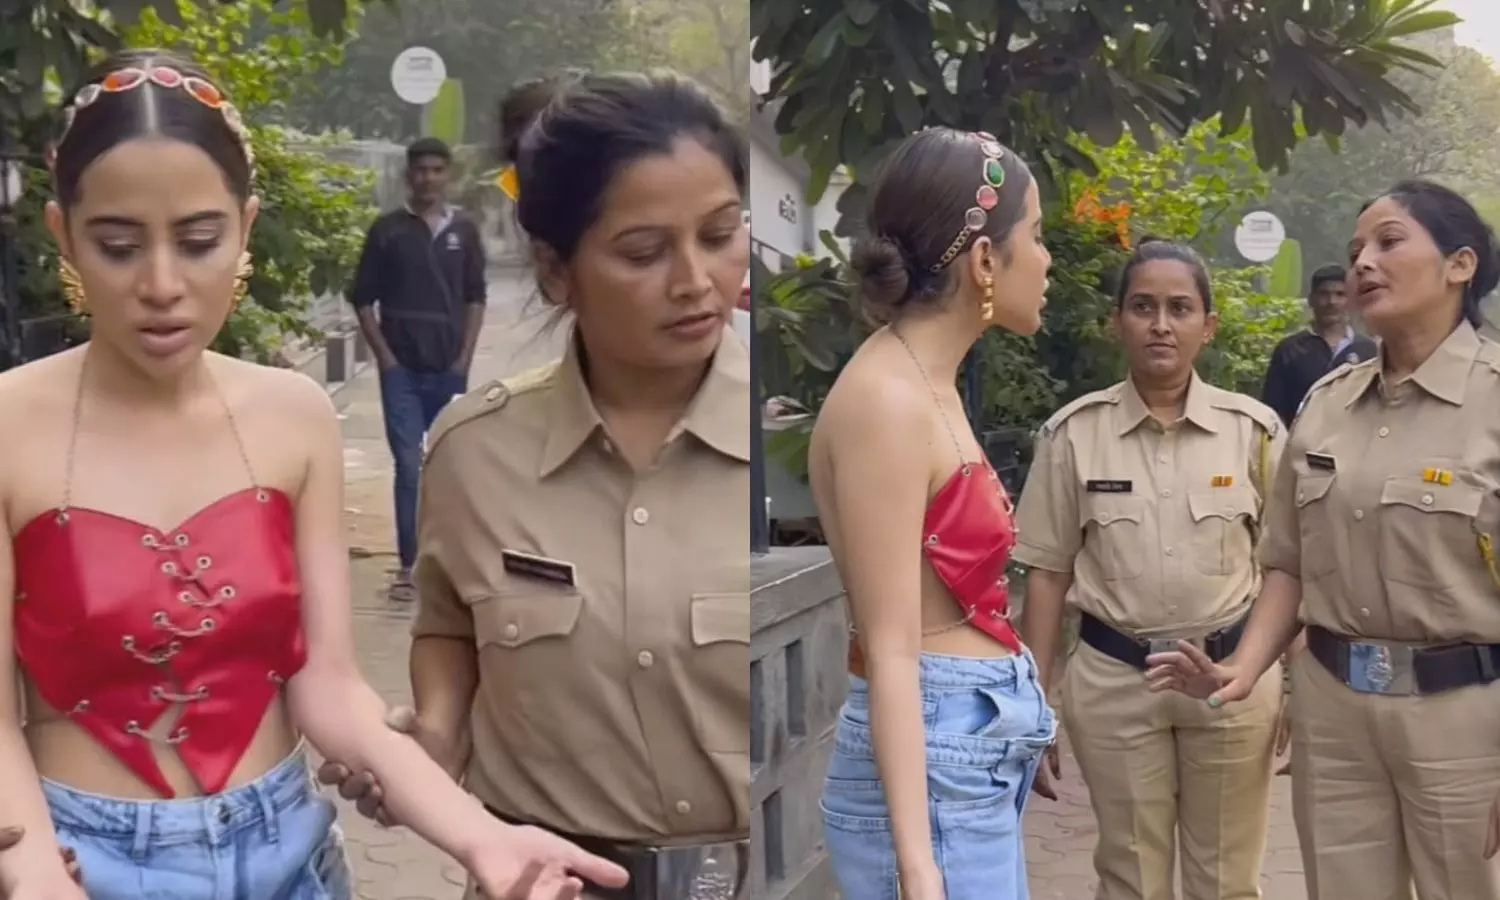 बोल्ड कपड़े पहनने के कारण उर्फी जावदे को मुंबई पुलिस ने किया गिरफ्तार | Uorfi Javed ARRESTED By Mumbai Police For Her Bold Clothes | Newstrack Samachar | Uorfi Javed को भारी